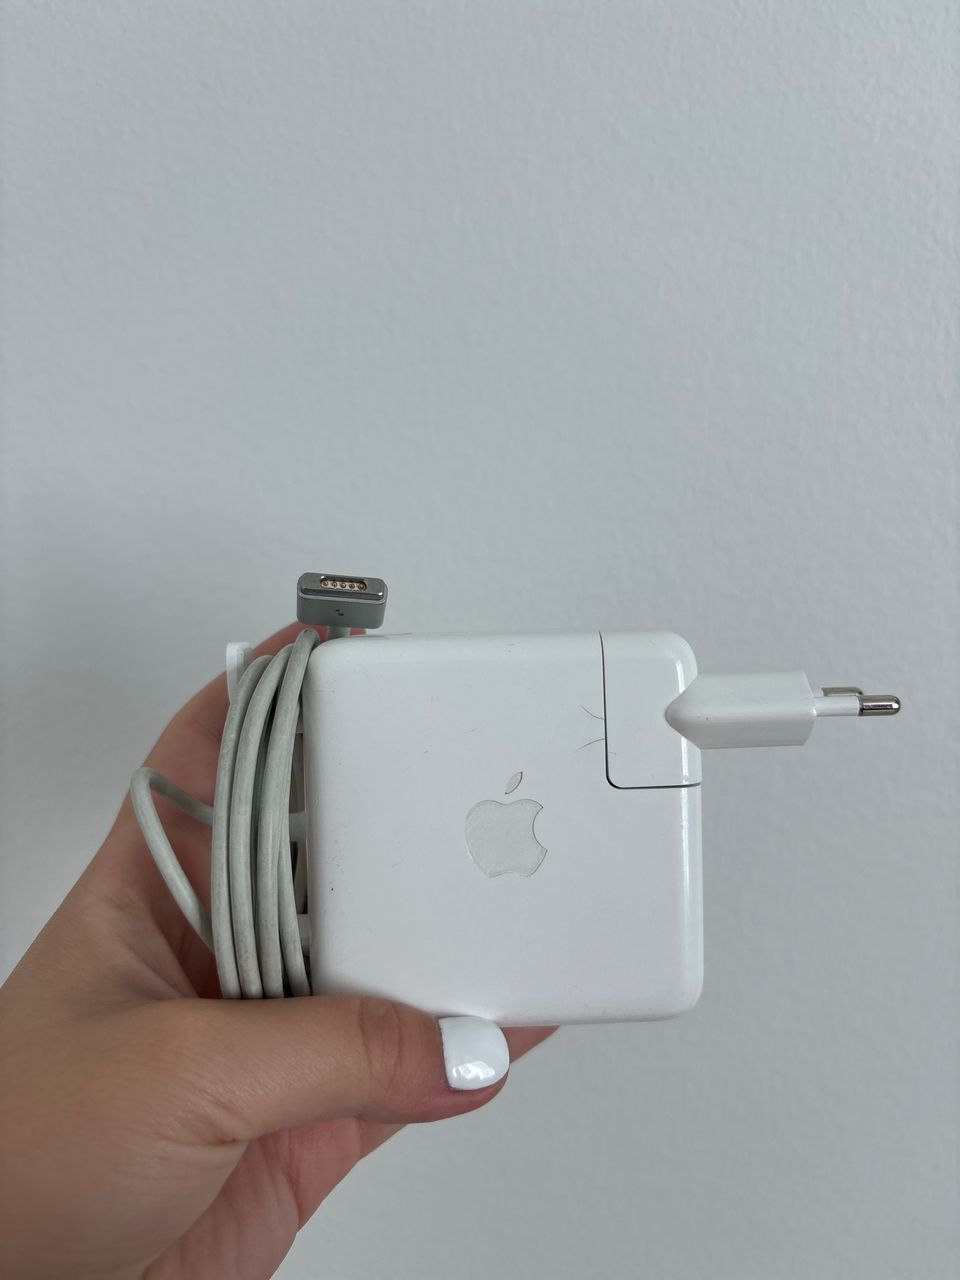 Apple aito MagSafe laturi